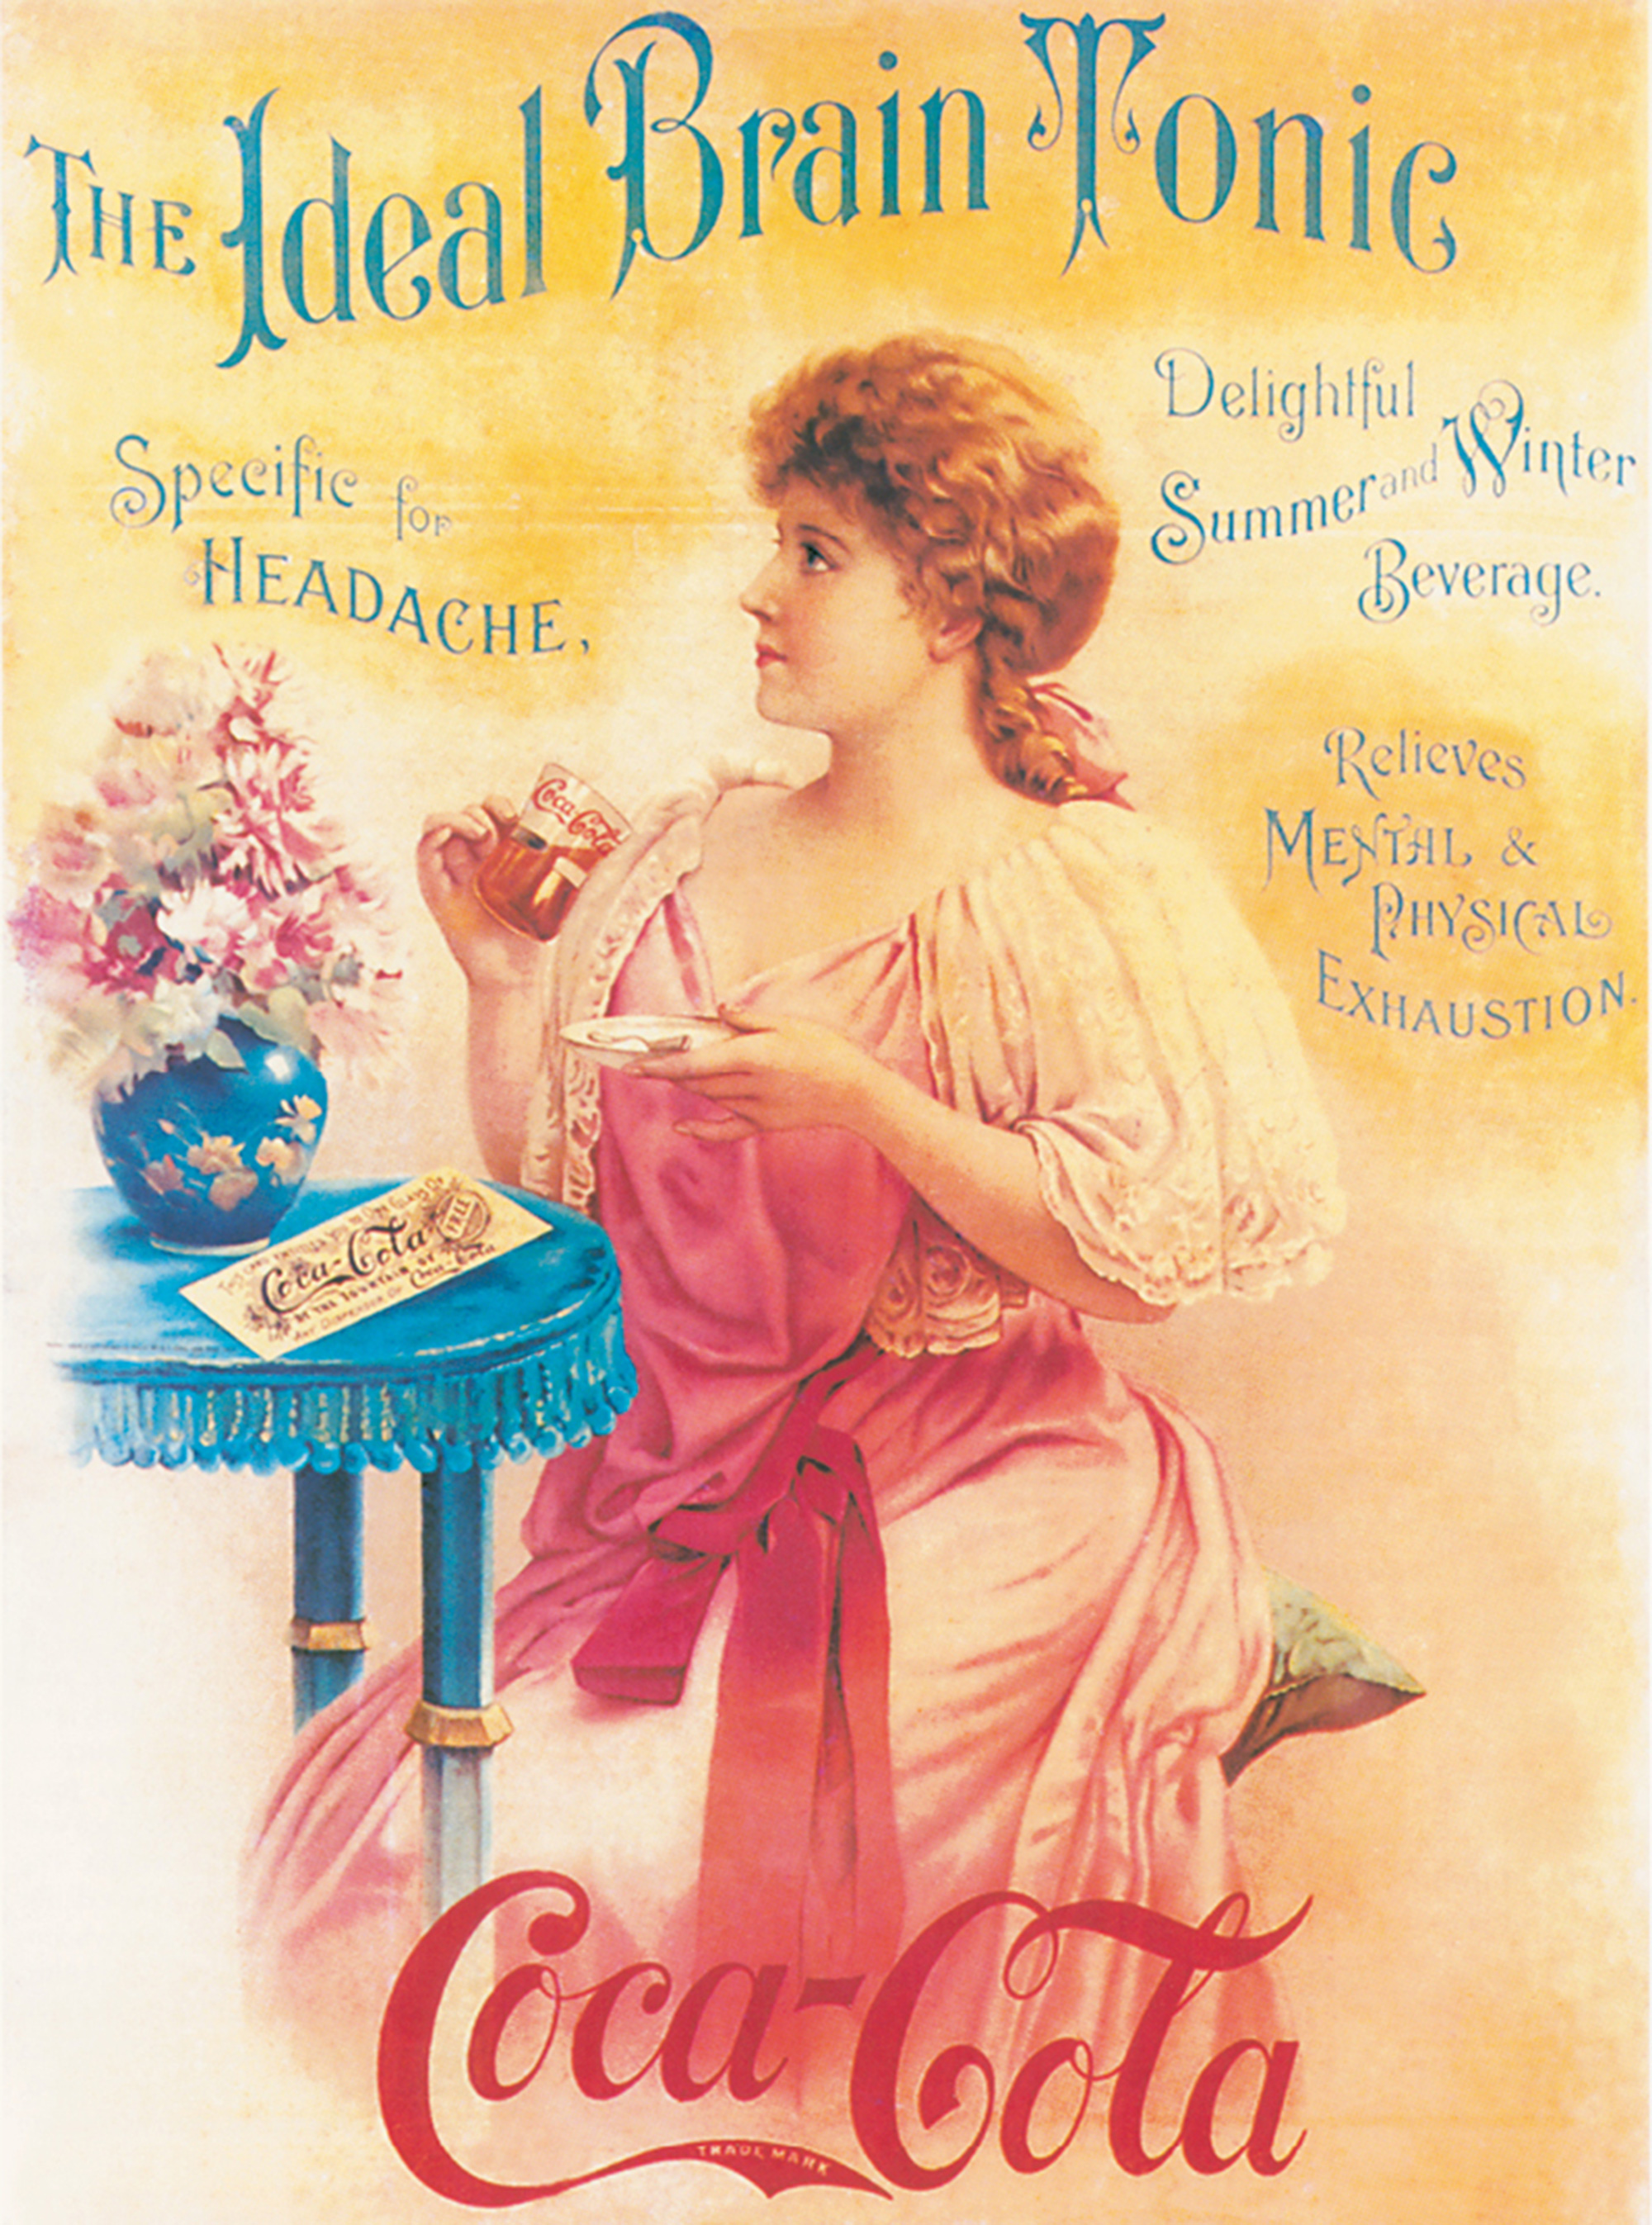 Coca-Cola calendar advertisement, 1897.